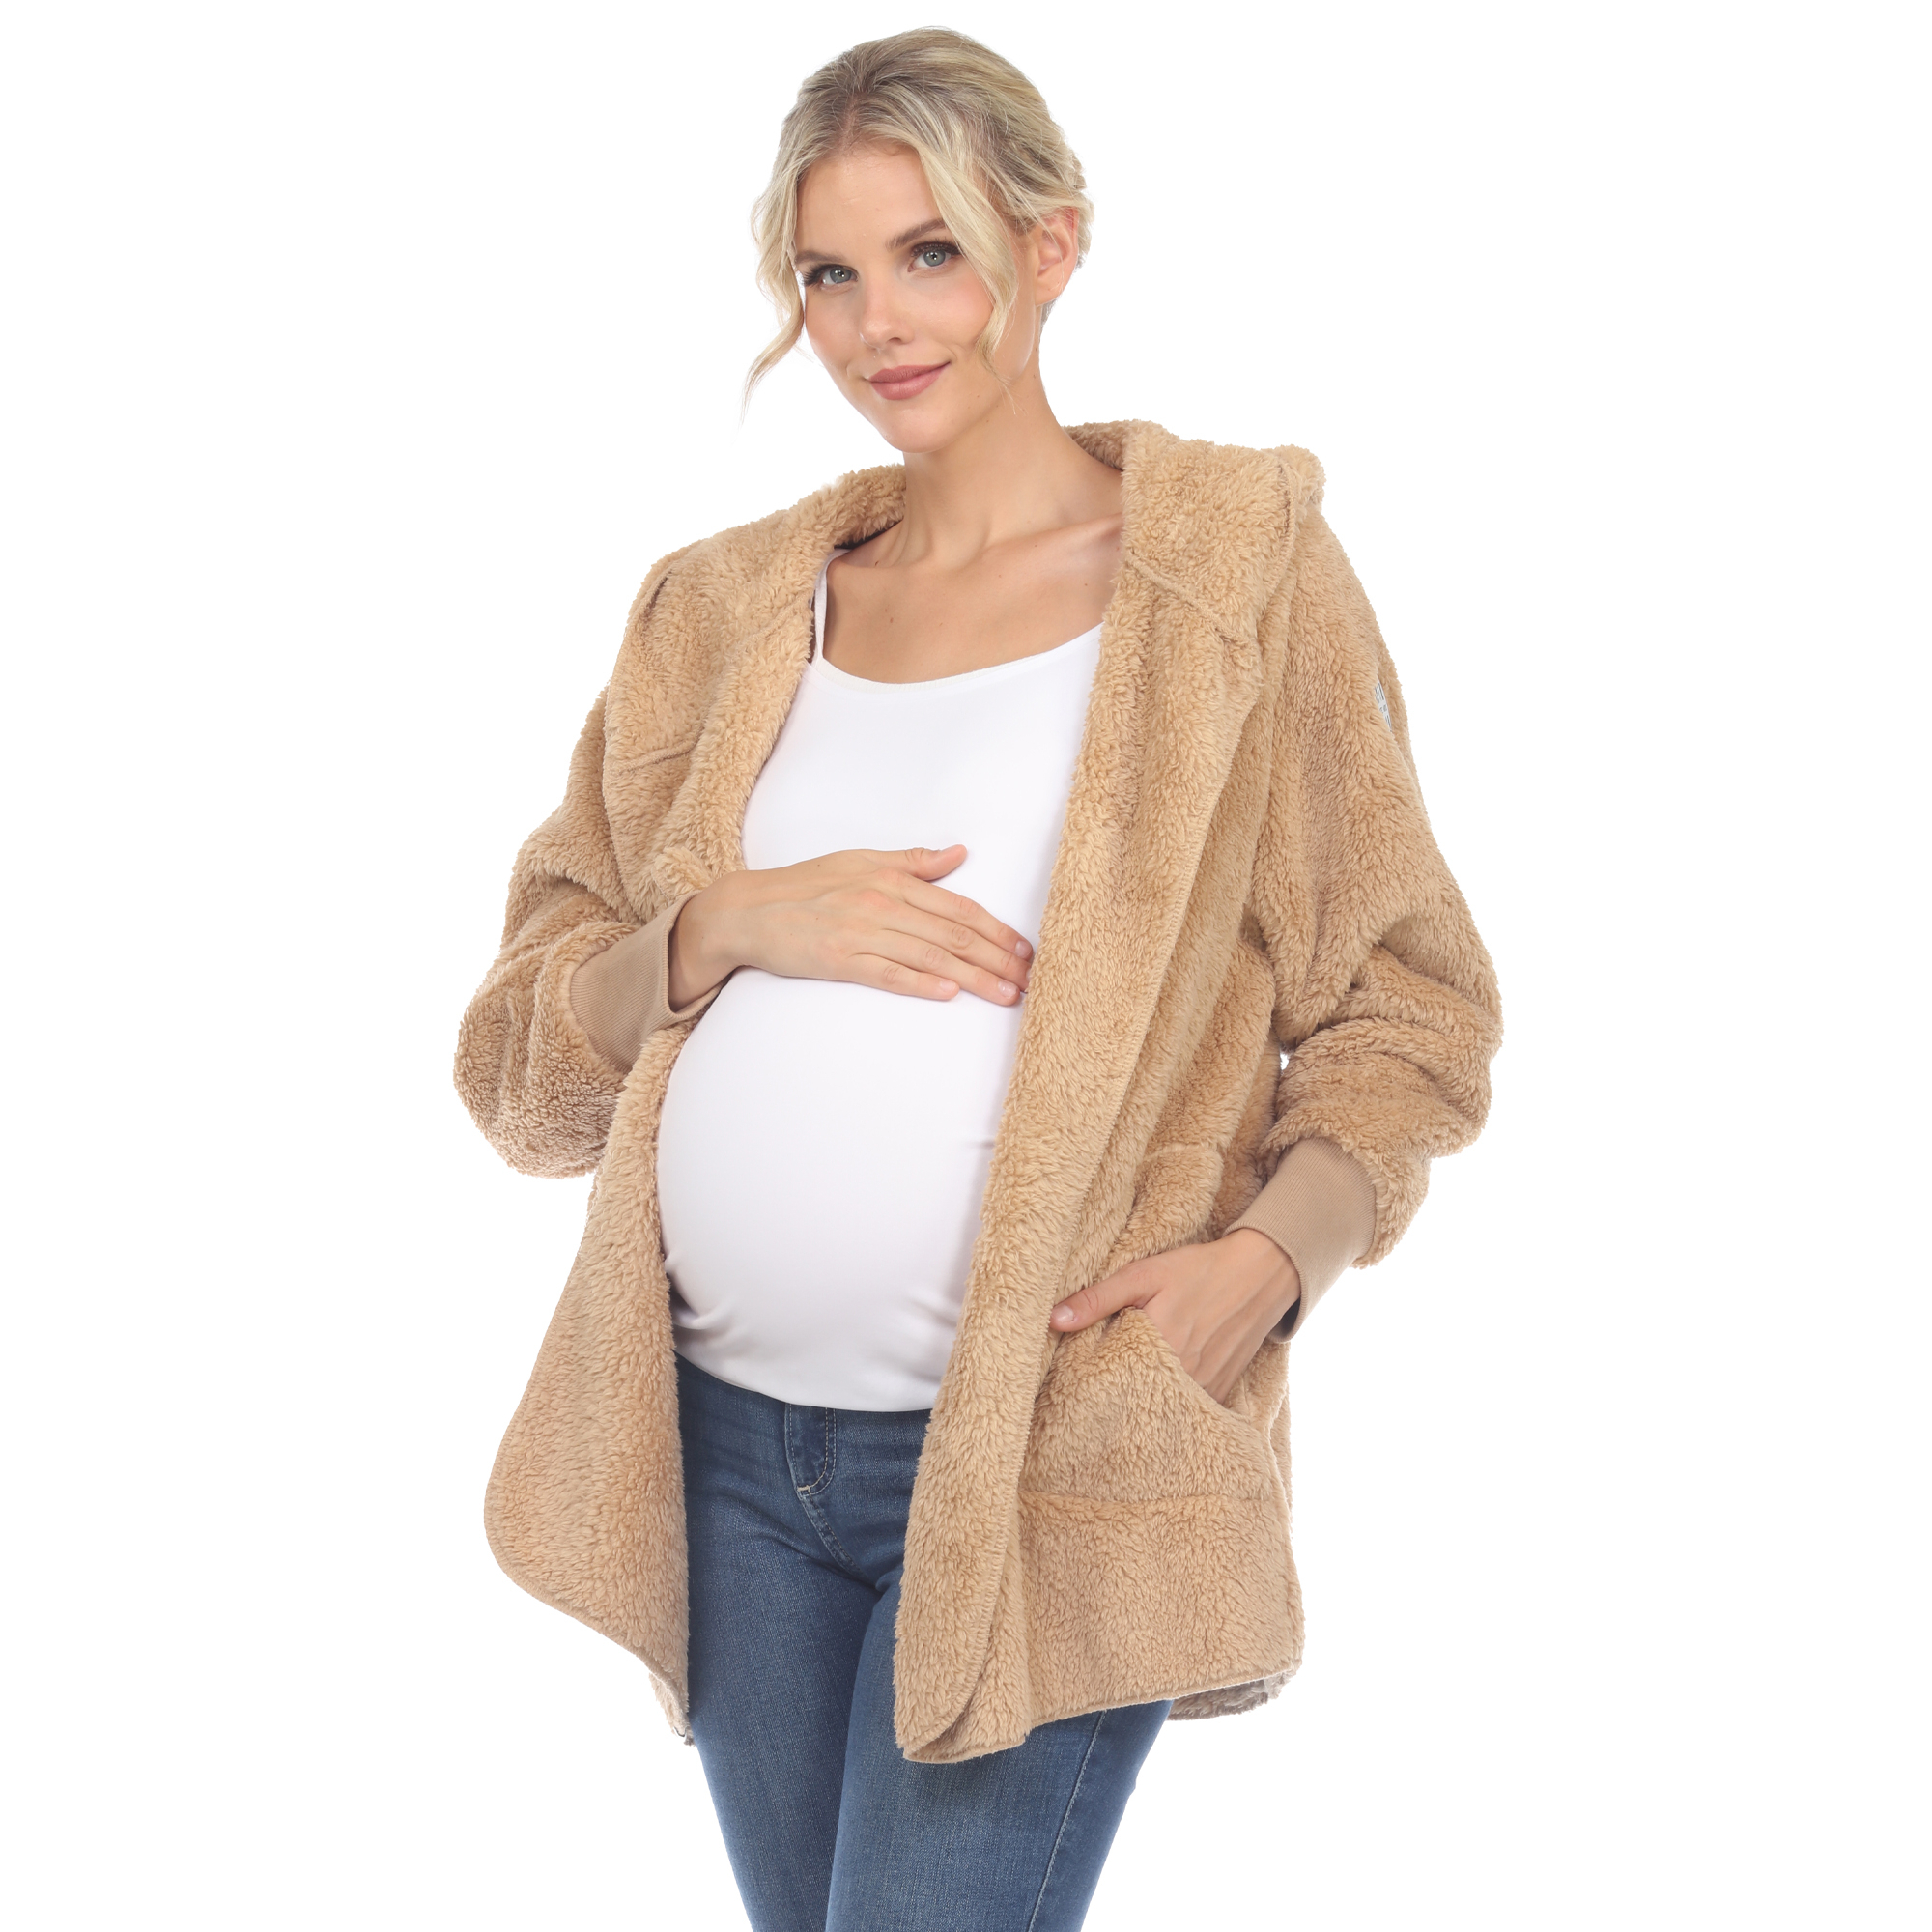 White Mark Womenâs Maternity Plush Hooded Cardigan With Pockets - Camel, L/XL